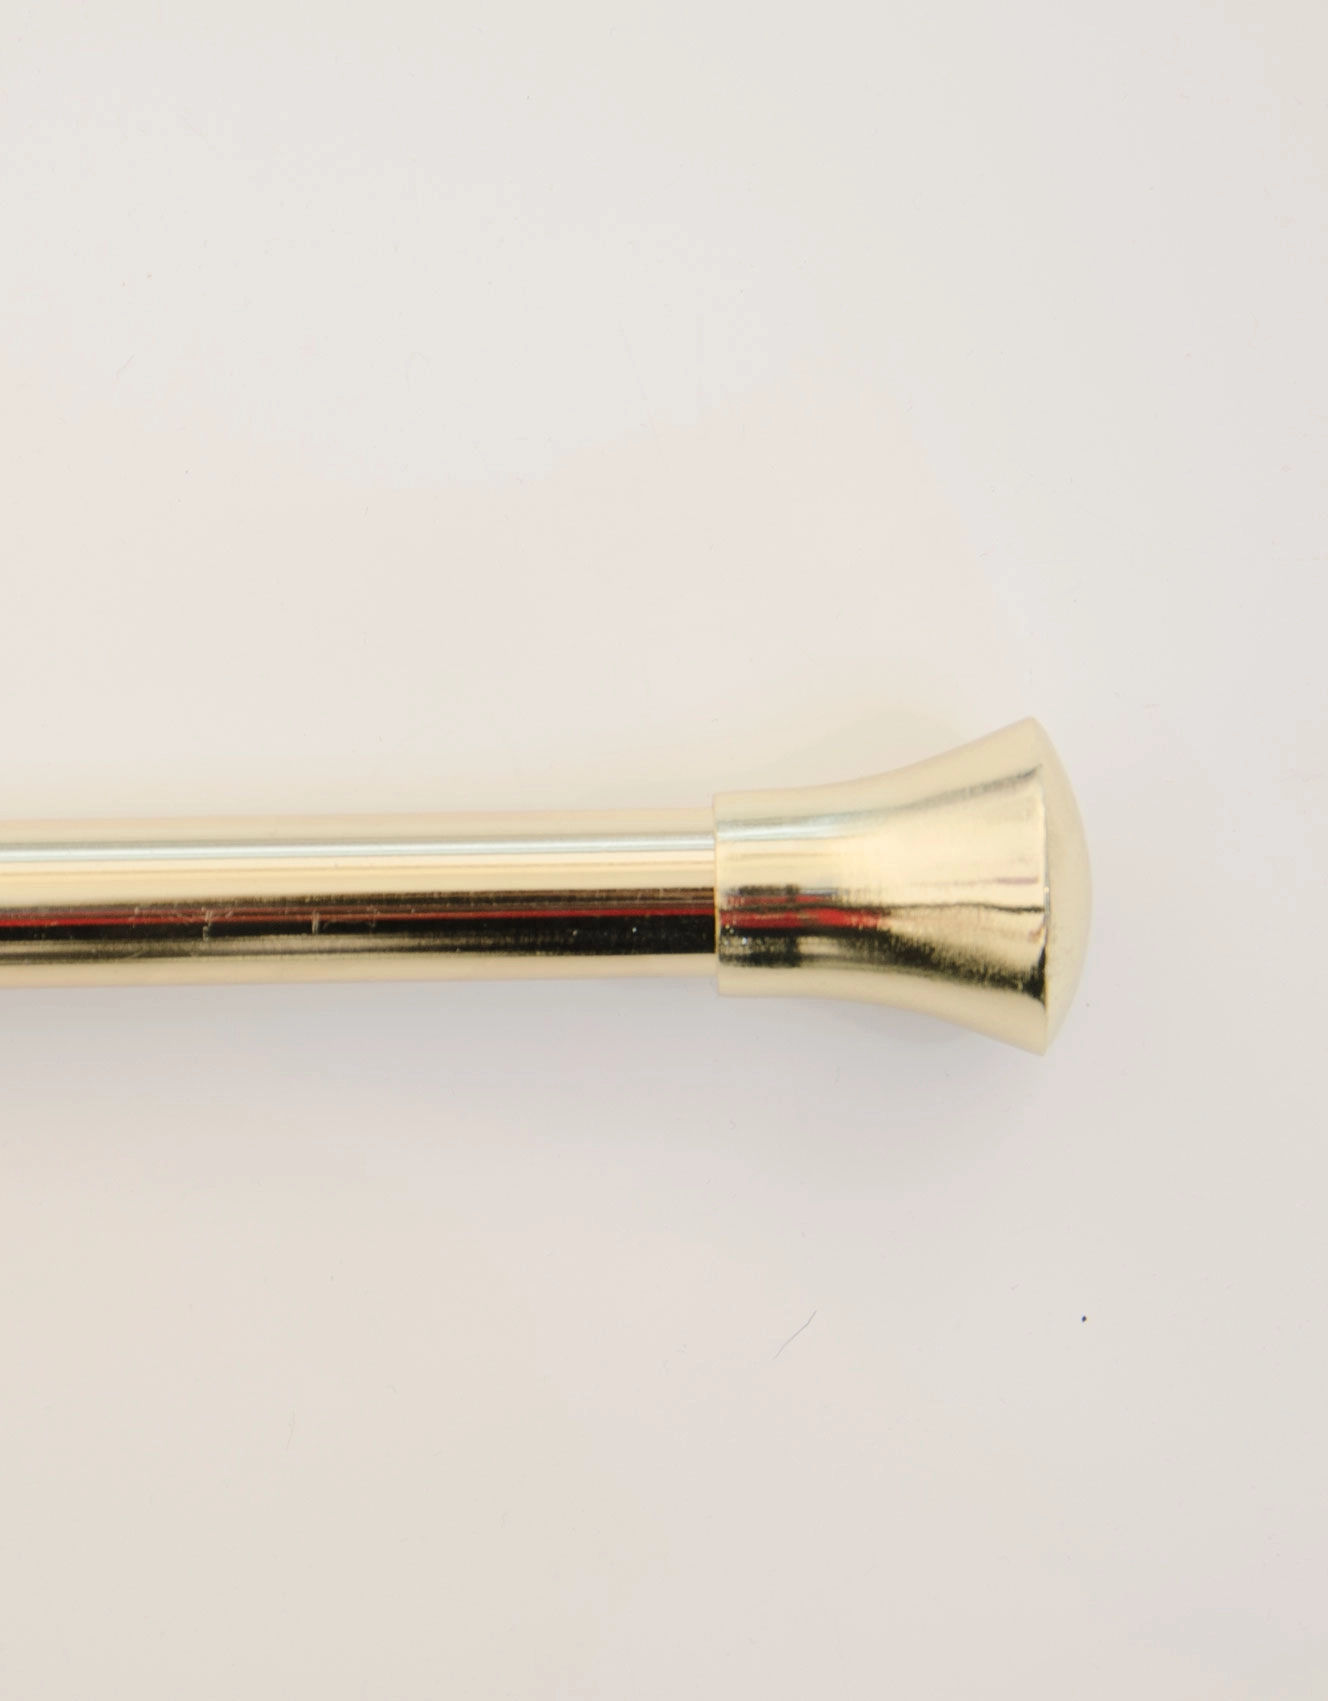 Vega brass curtain rod, 16/19 mm